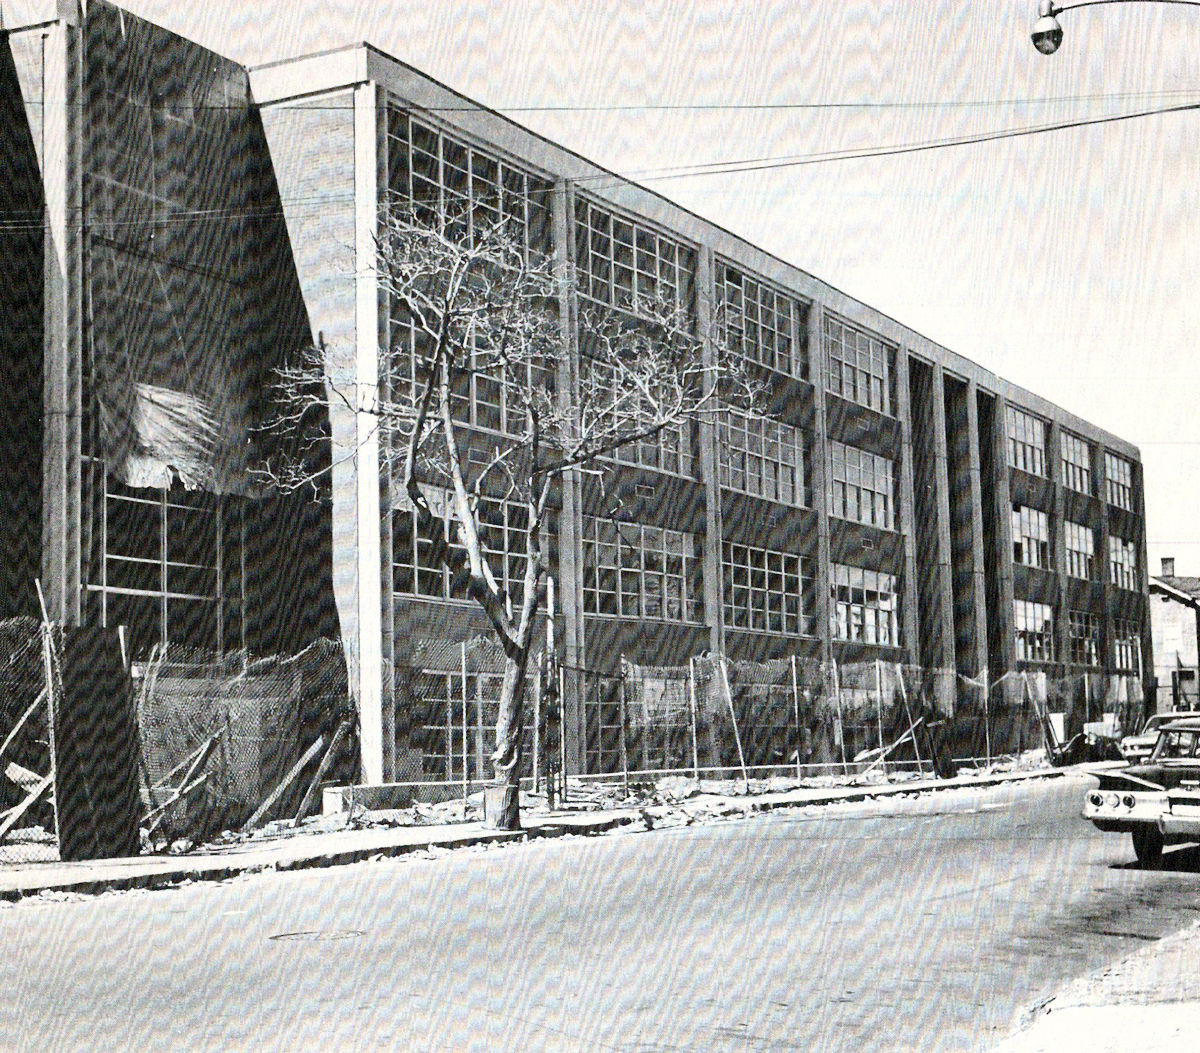 1960's
Photo from the Newark Municipal Yearbook
